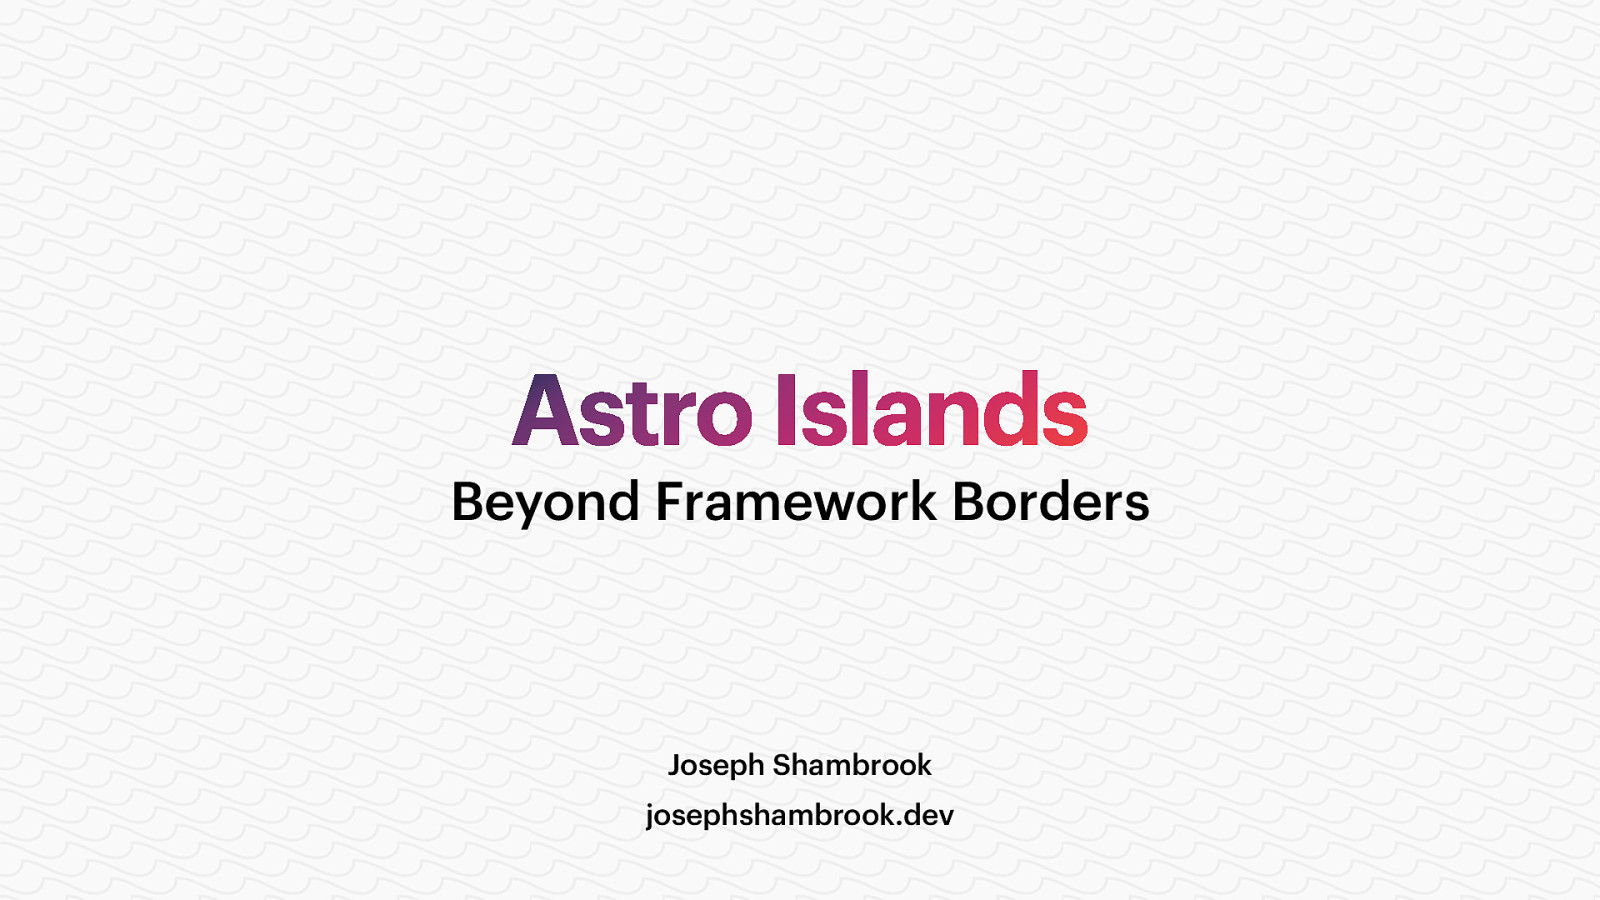 Astro Islands: Beyond Framework Borders by Joseph Shambrook